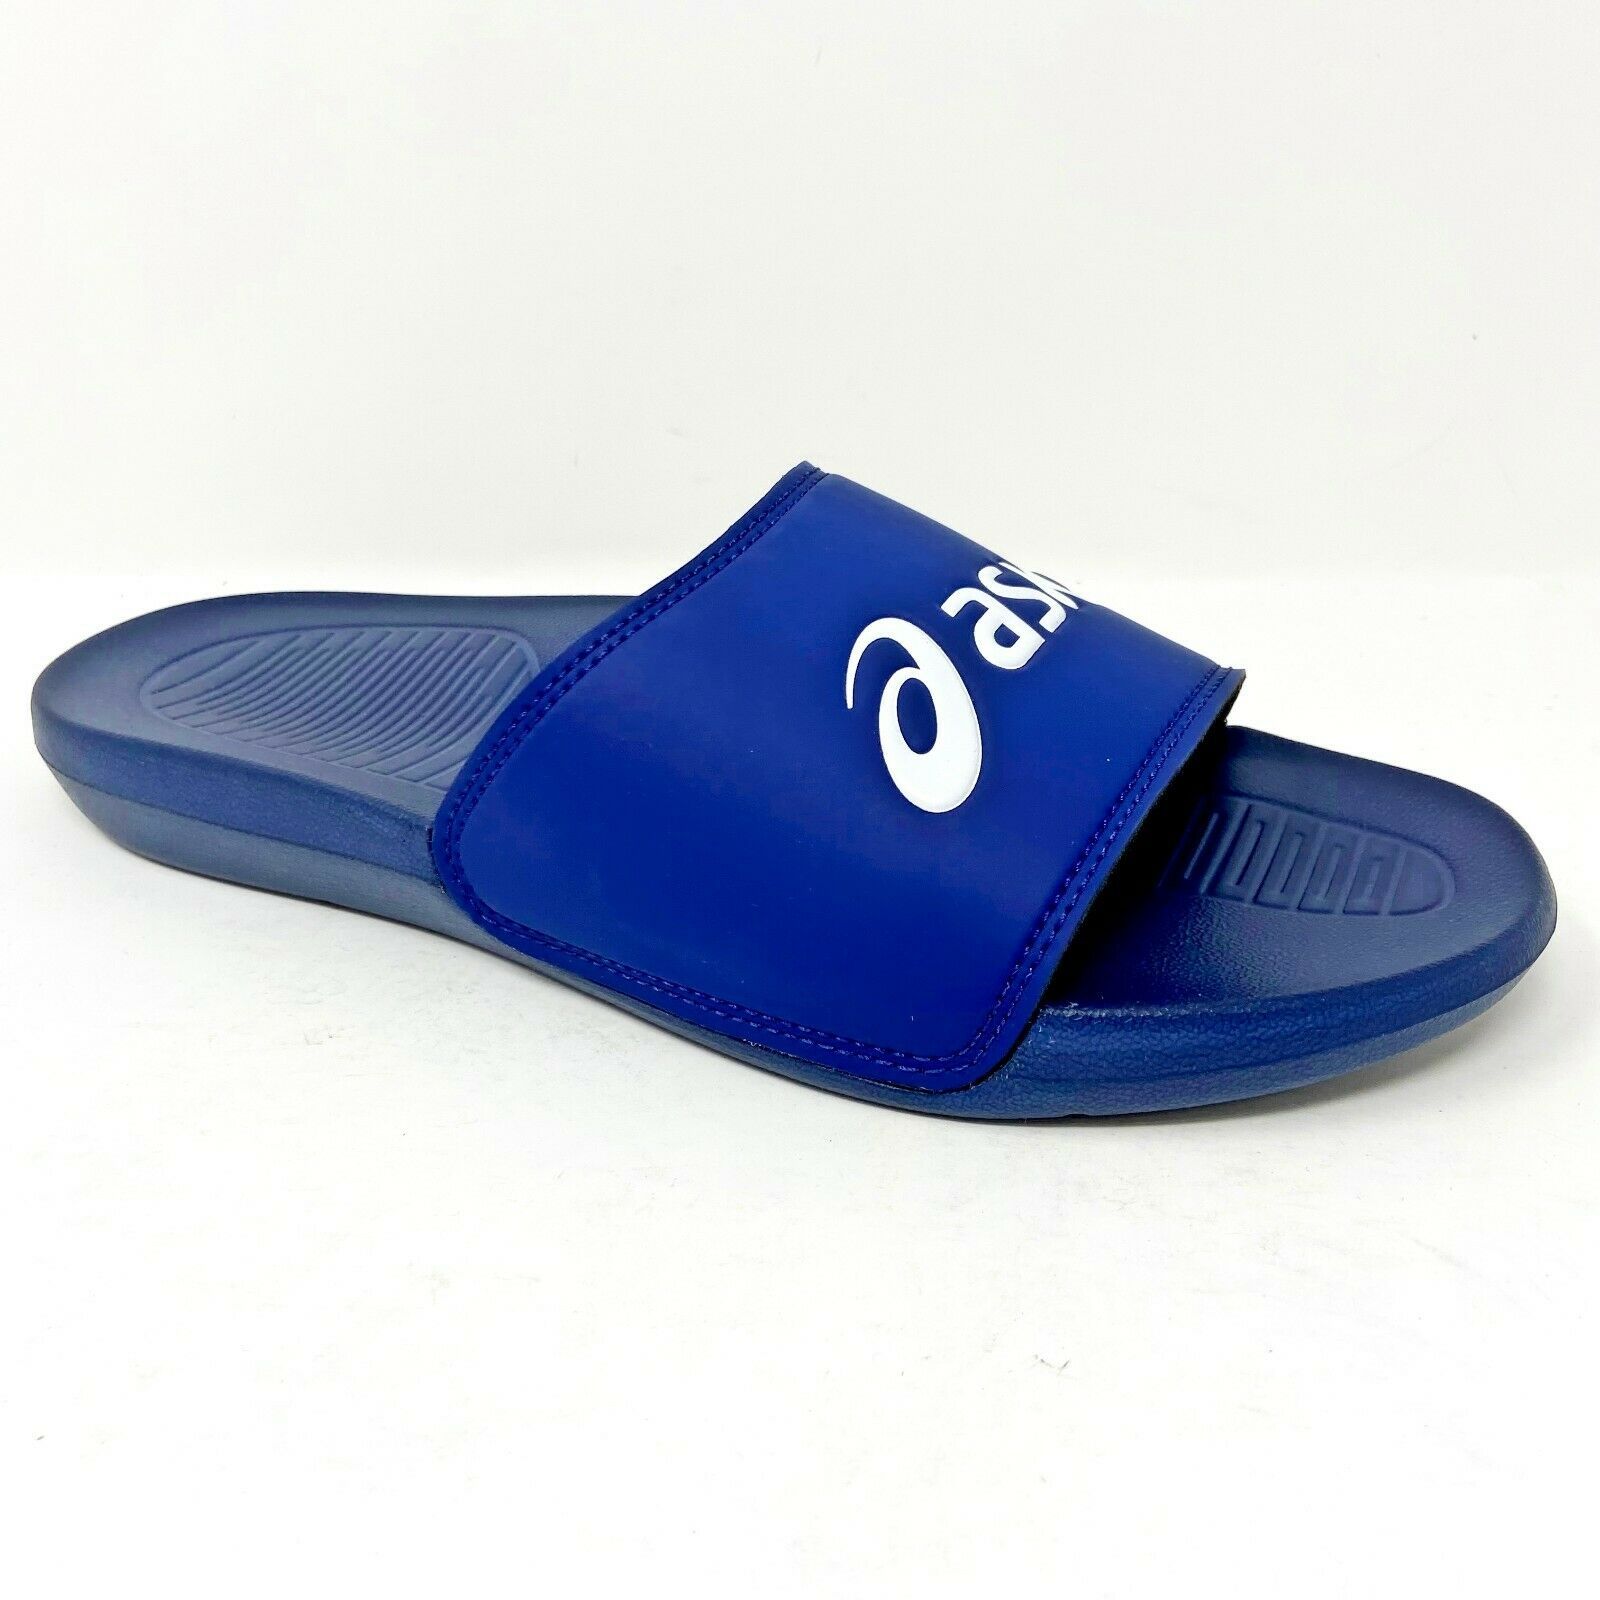 Asics AS003 Indigo Blue White Mens Slides Sandals 1173A006 400